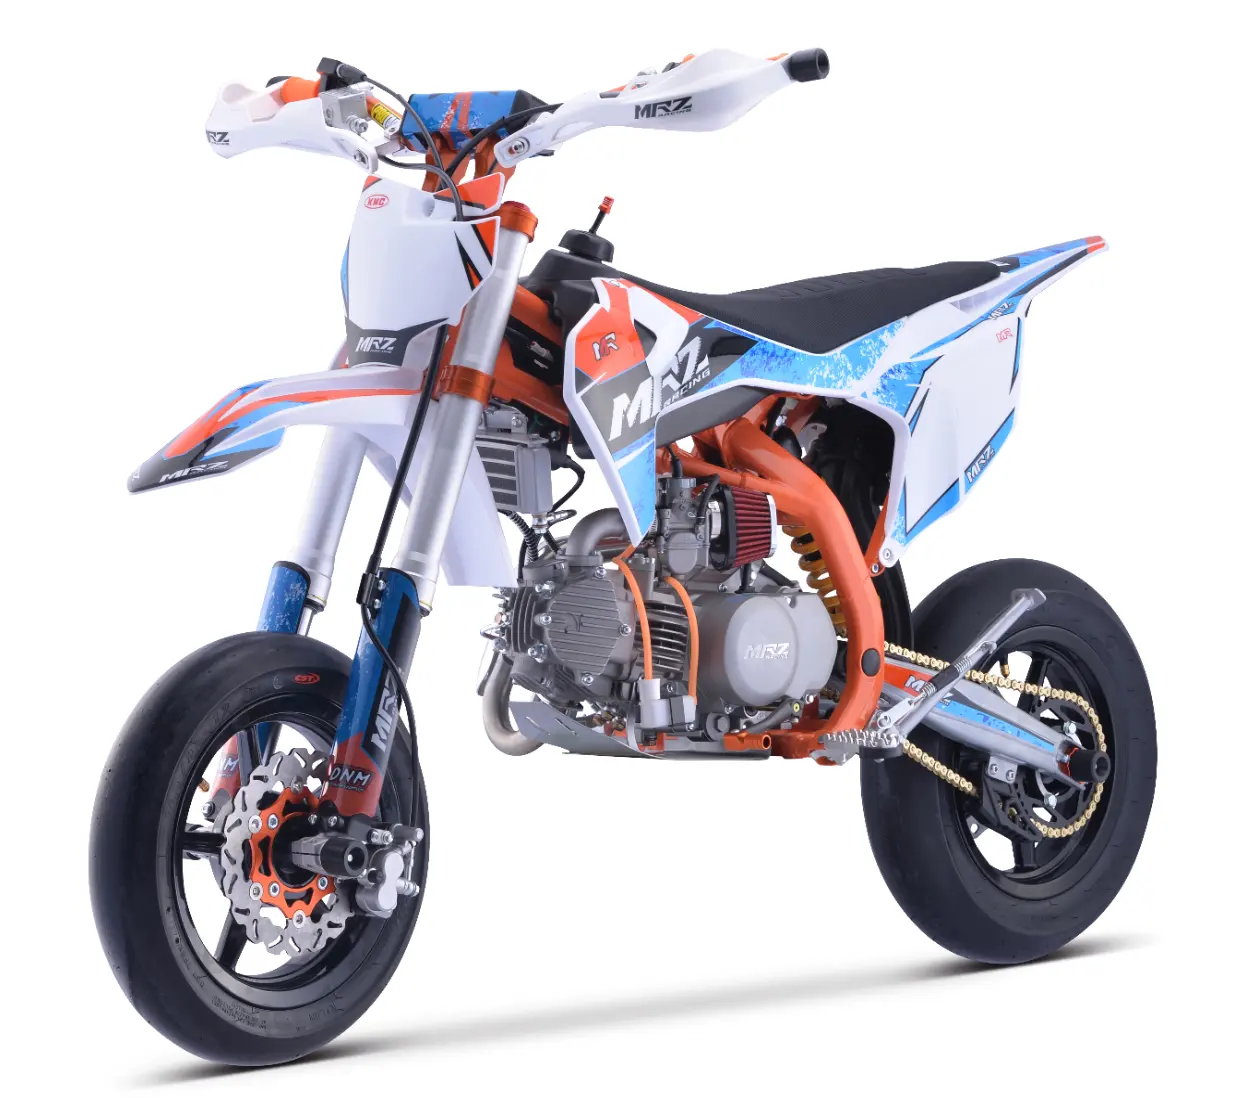 DT 160 MOTARD yeni Supermotard 140cc 160cc yağ soğutucu arazi motosikleti Motard bisiklet çukur bisiklet motosiklet ZS160 çin